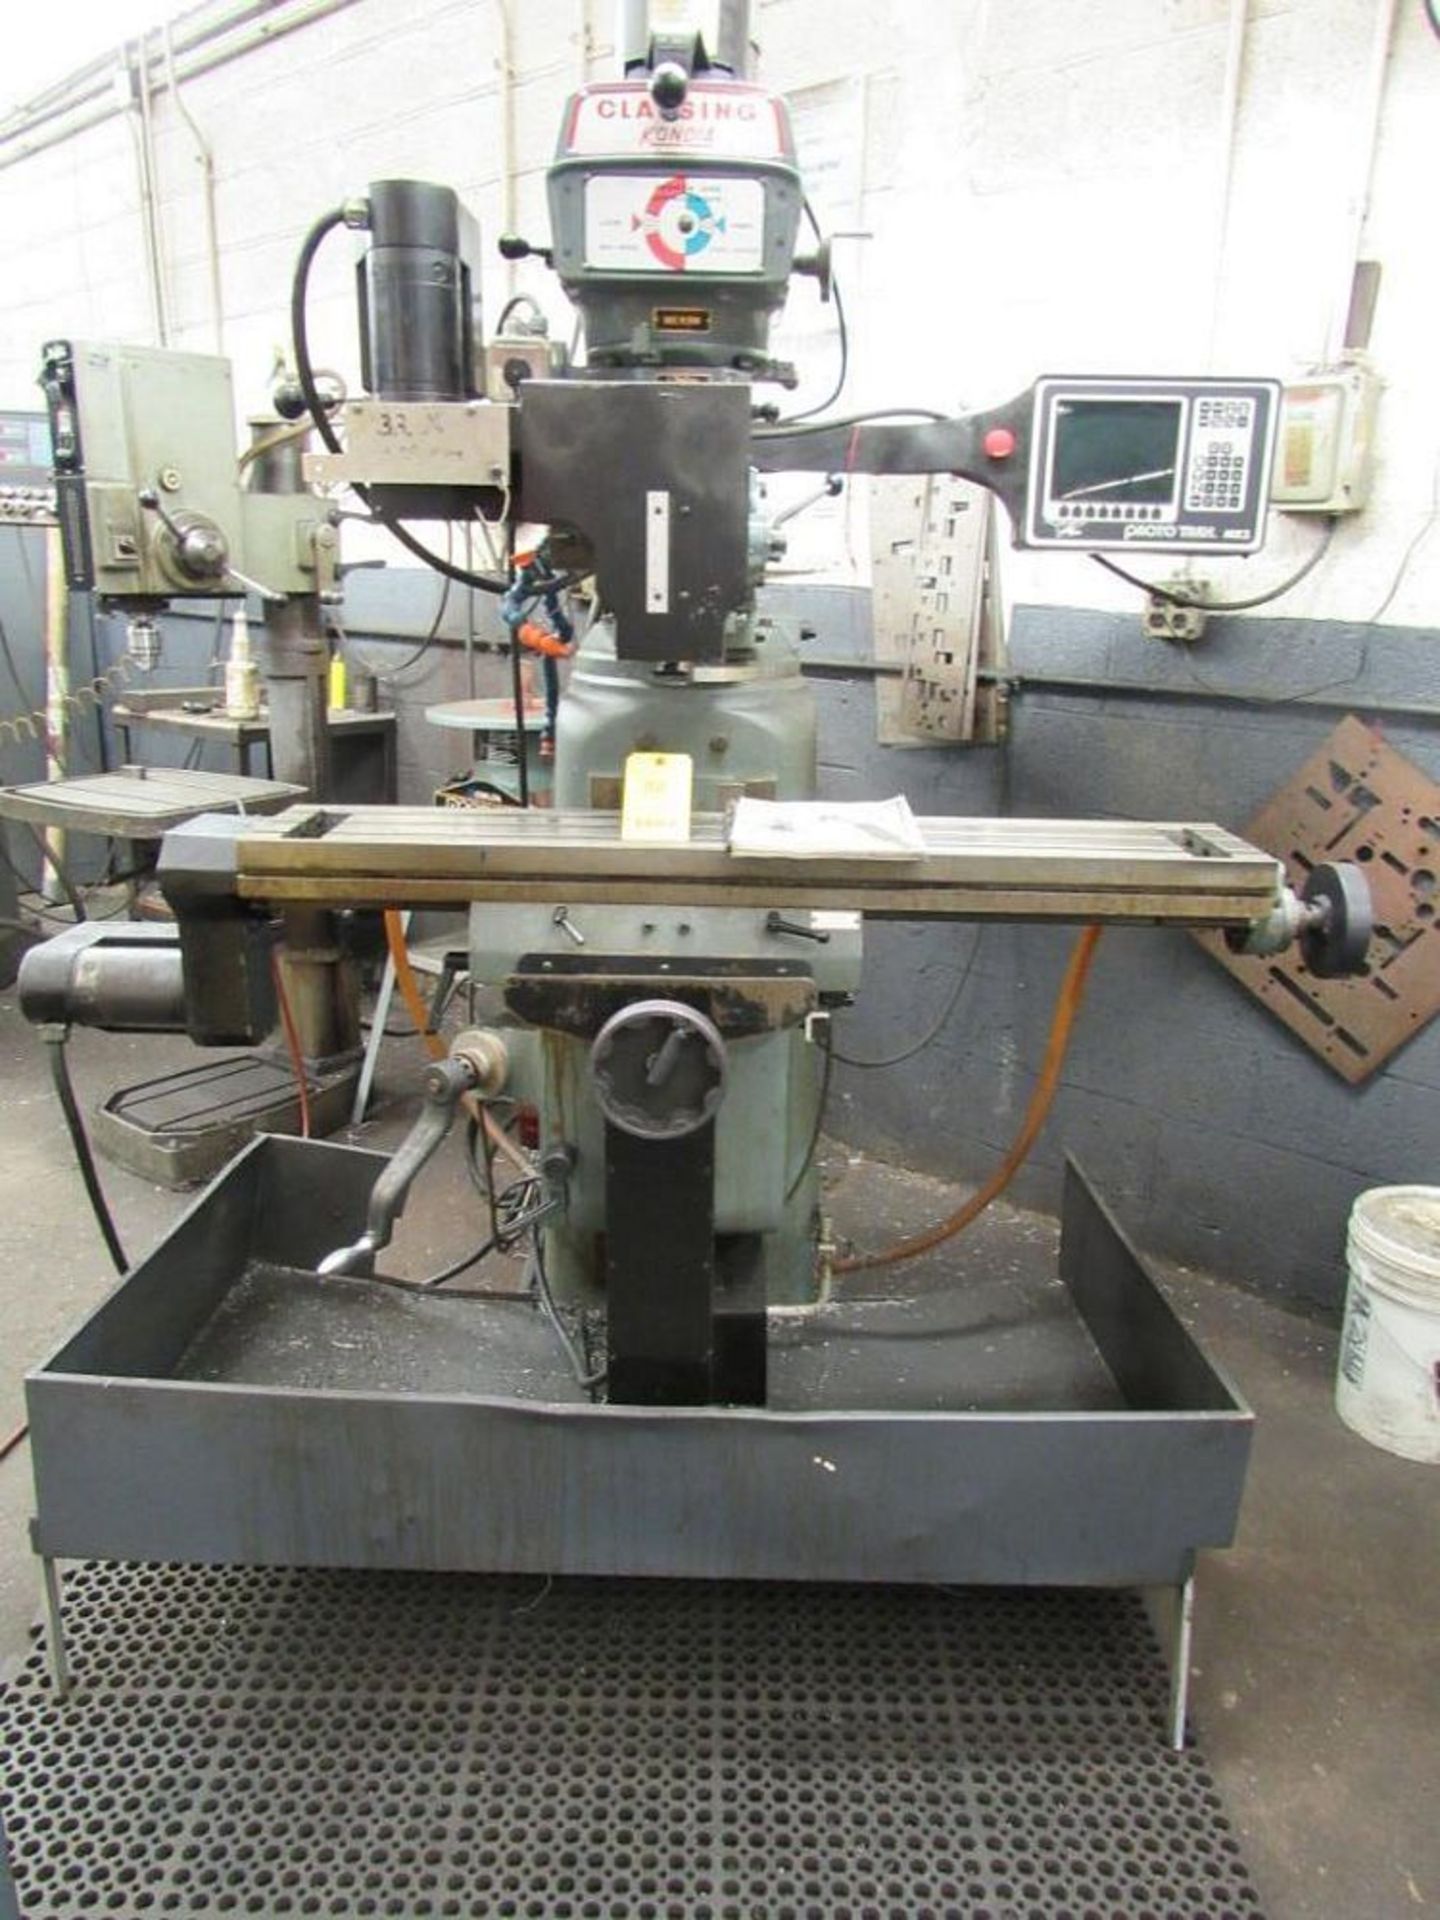 Clausing CNC Vertical Milling Machine Model Kondia FV-1, S/N 298, 3 HP, with Power Draw Bar, Southwe